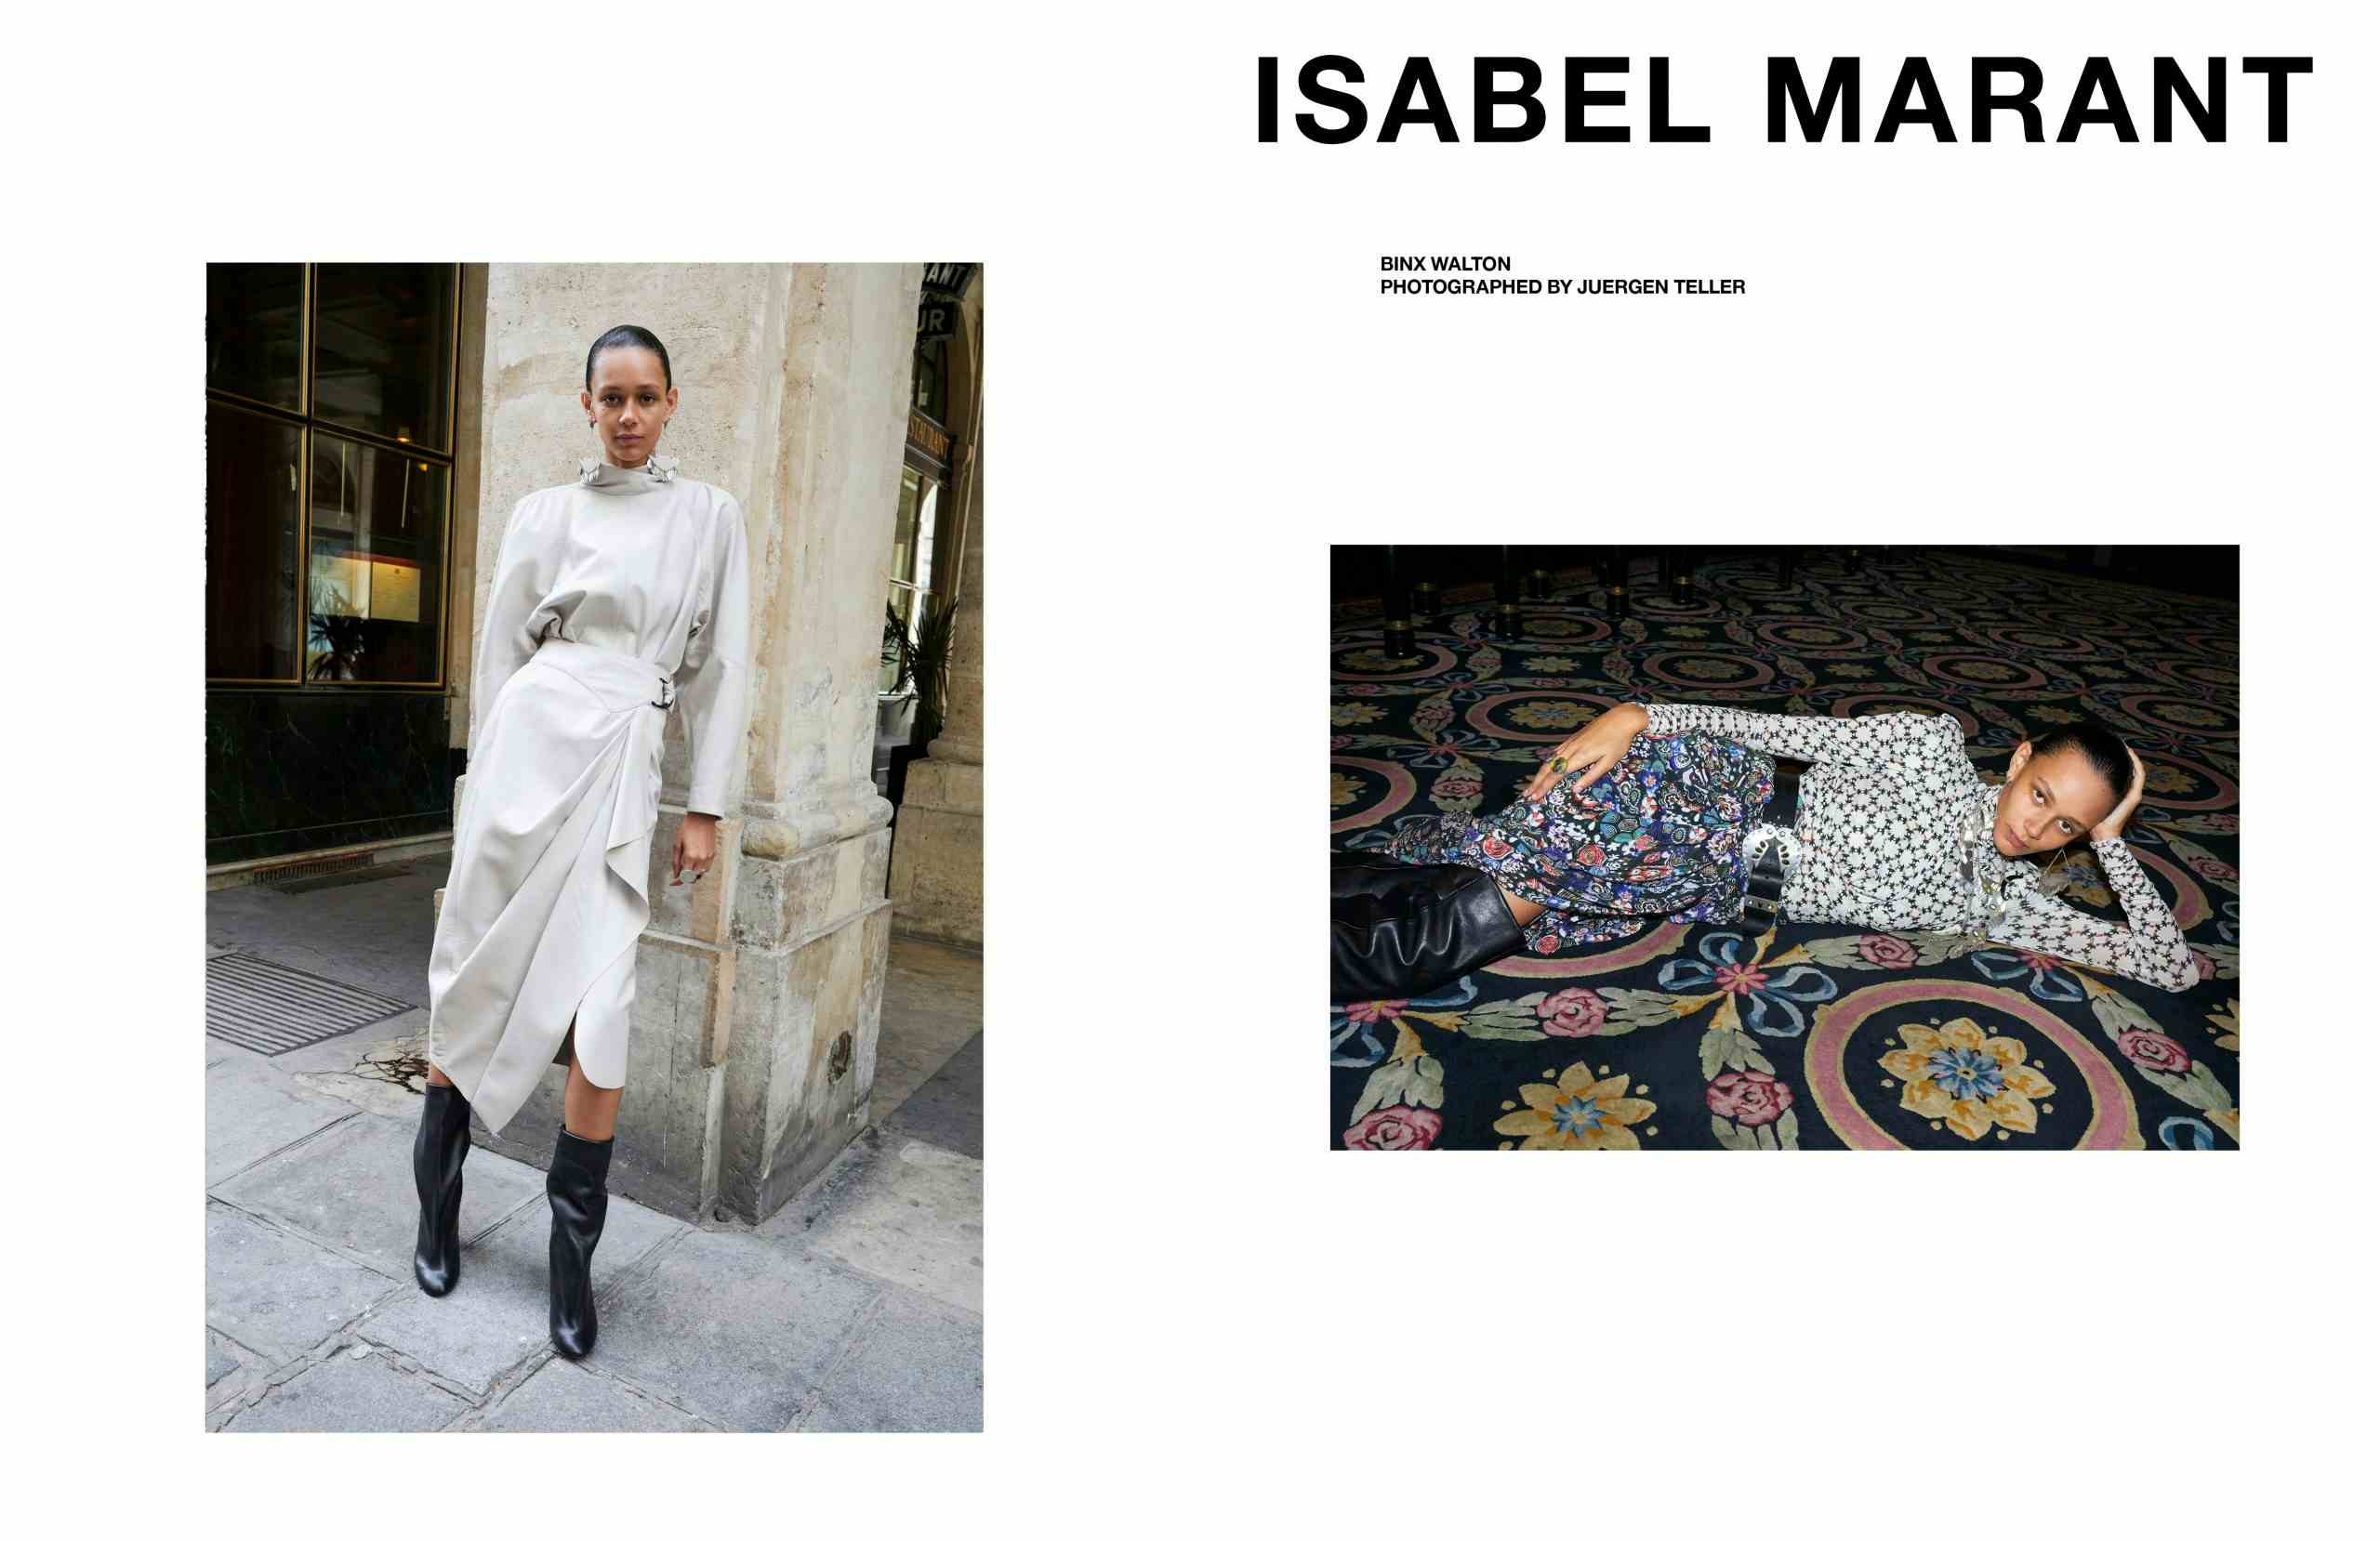 ISABEL MARANT - Fall 2019 Campaign
Photographer: Juergen Teller
Model: Anna Ewers, Cara Tylor, Binx, Parker Van Noord
Stylist: Géraldine Saglio
Location: Paris